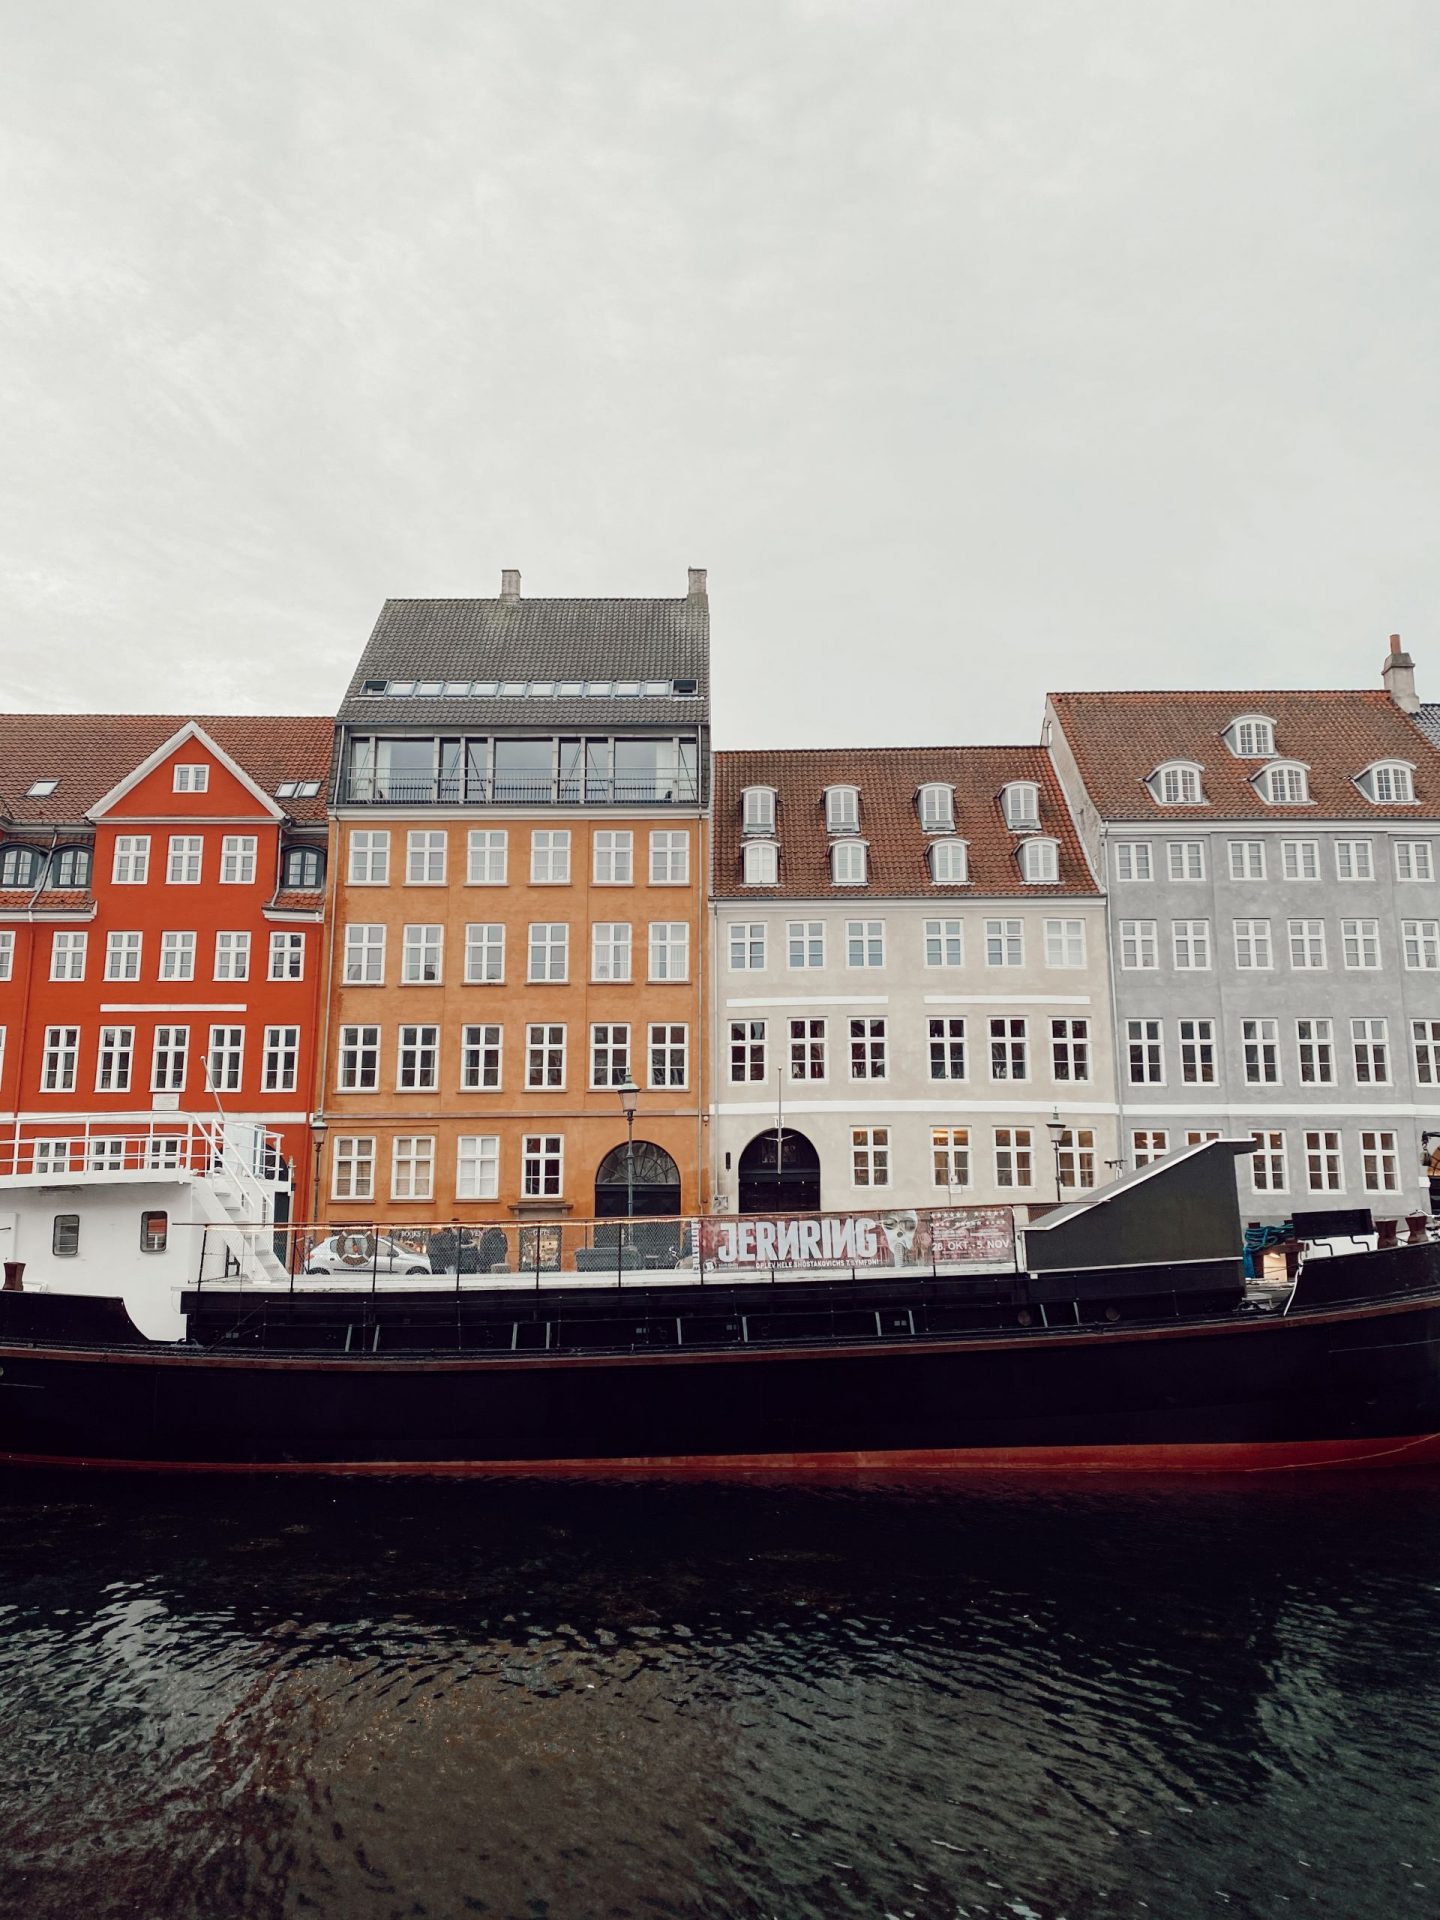 A Pocket Guide To Copenhagen